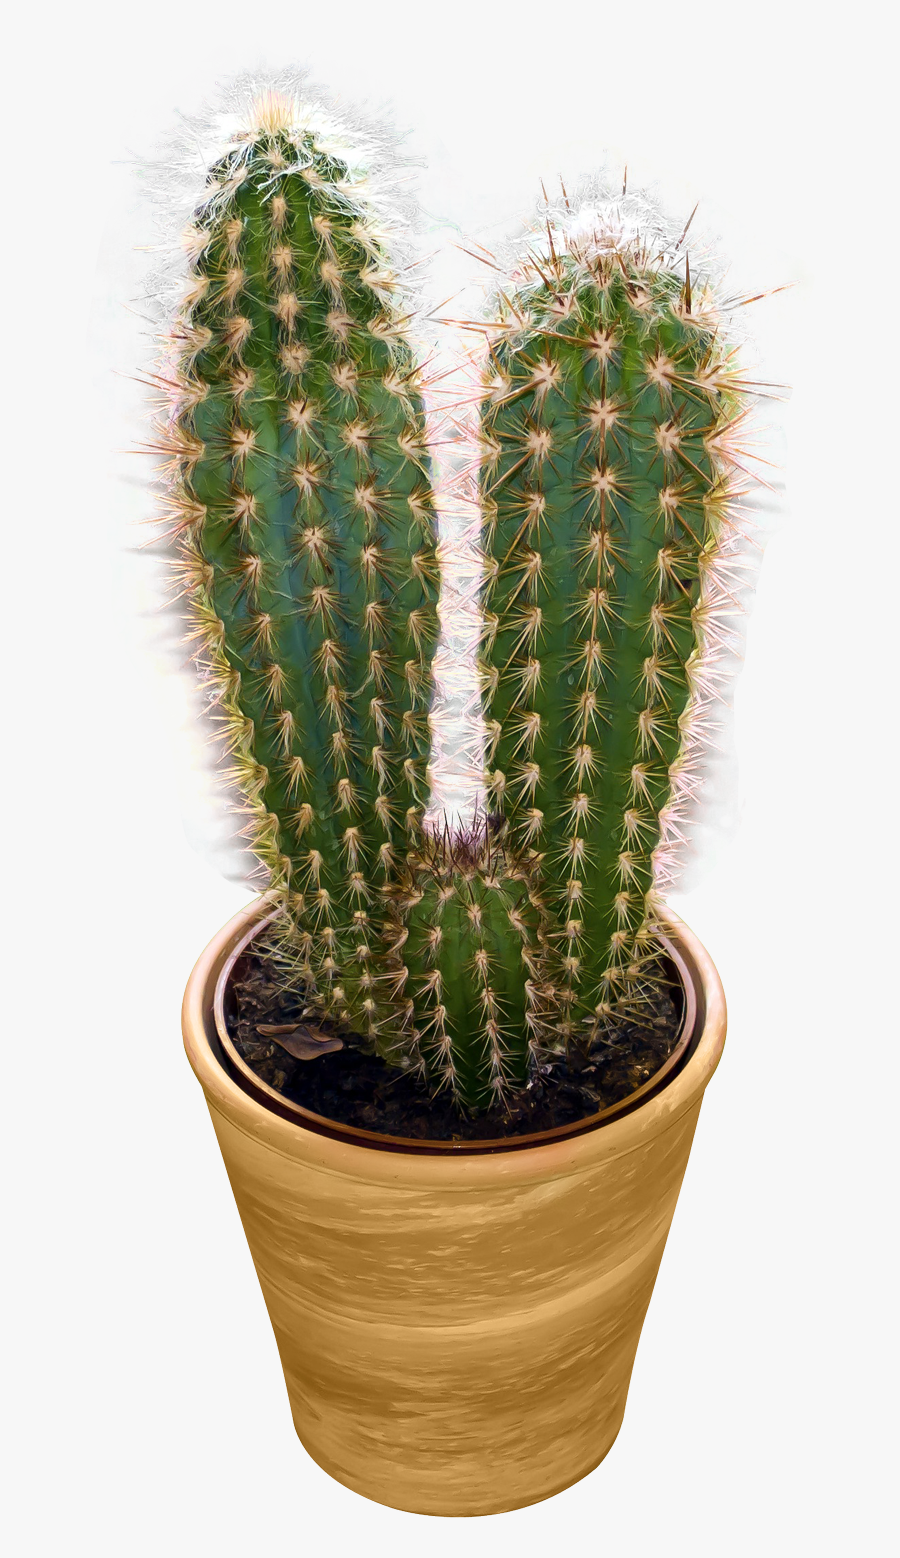 Cactus Png Image - Transparent Cactus Png, Transparent Clipart